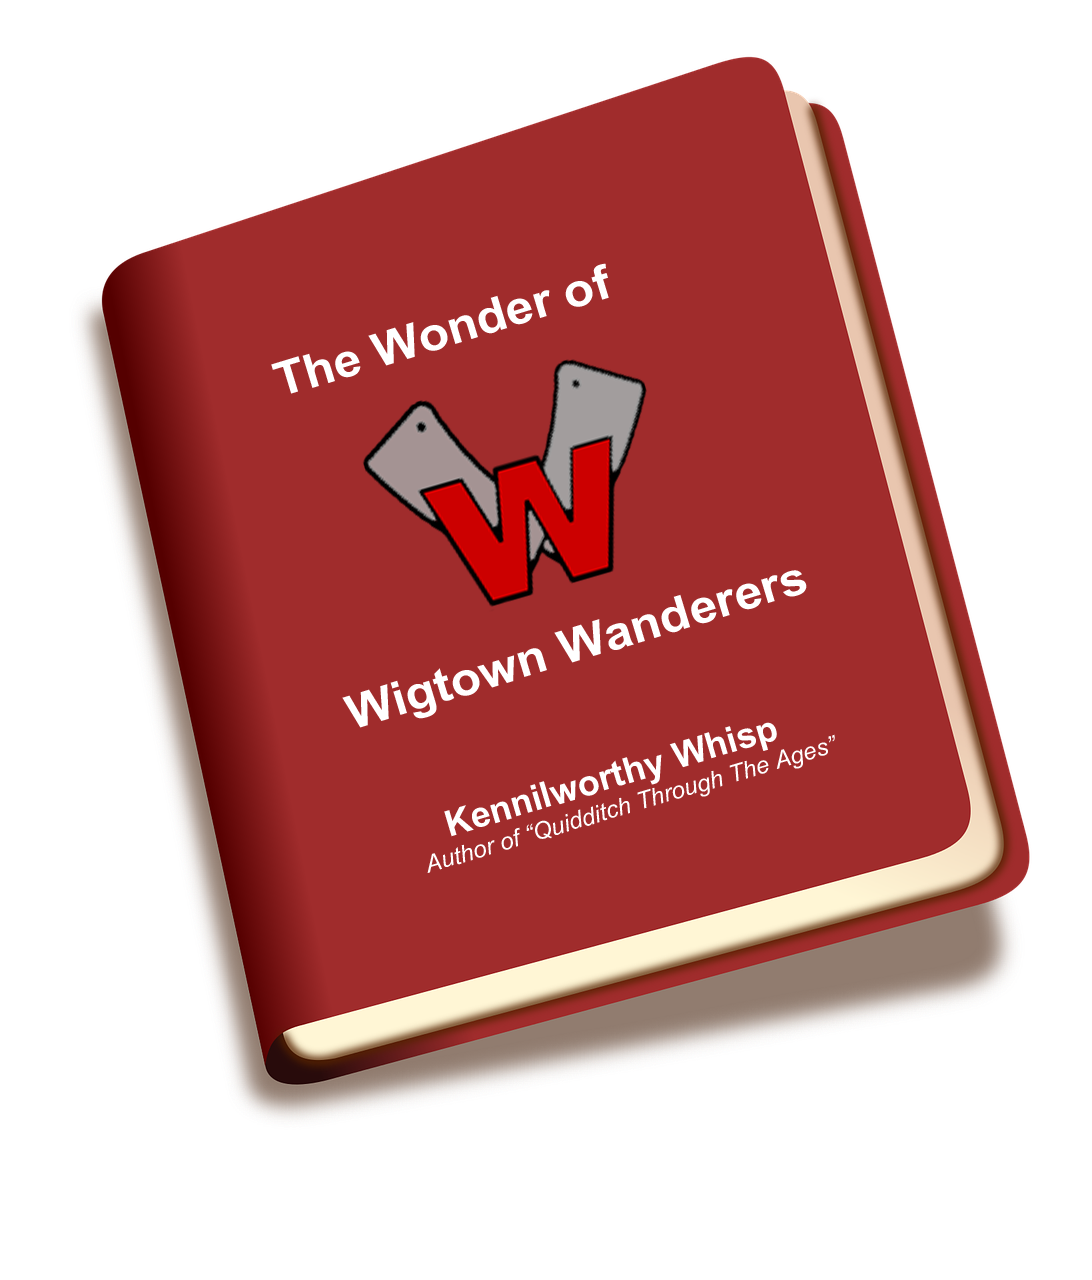 Wonder of Wigtown Wanderers book